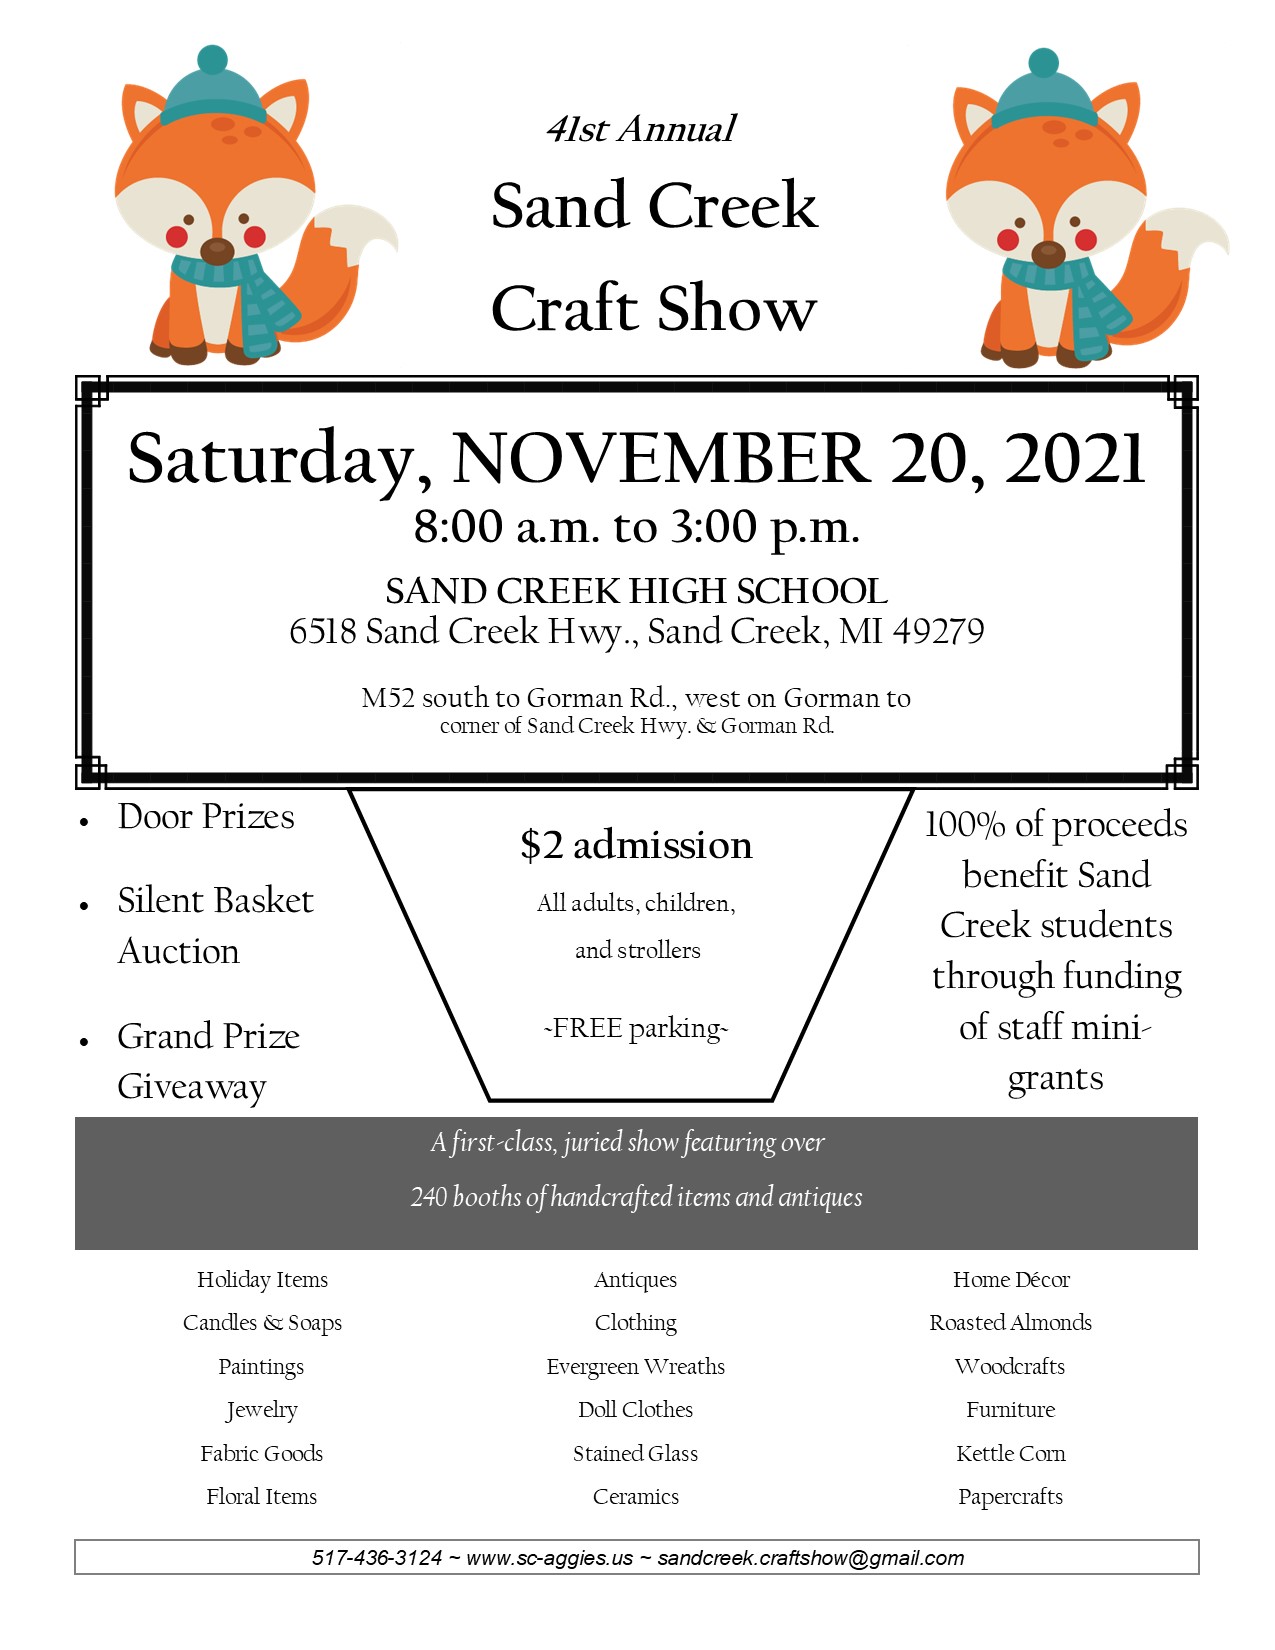 Craft Show Sand Creek Community Schools